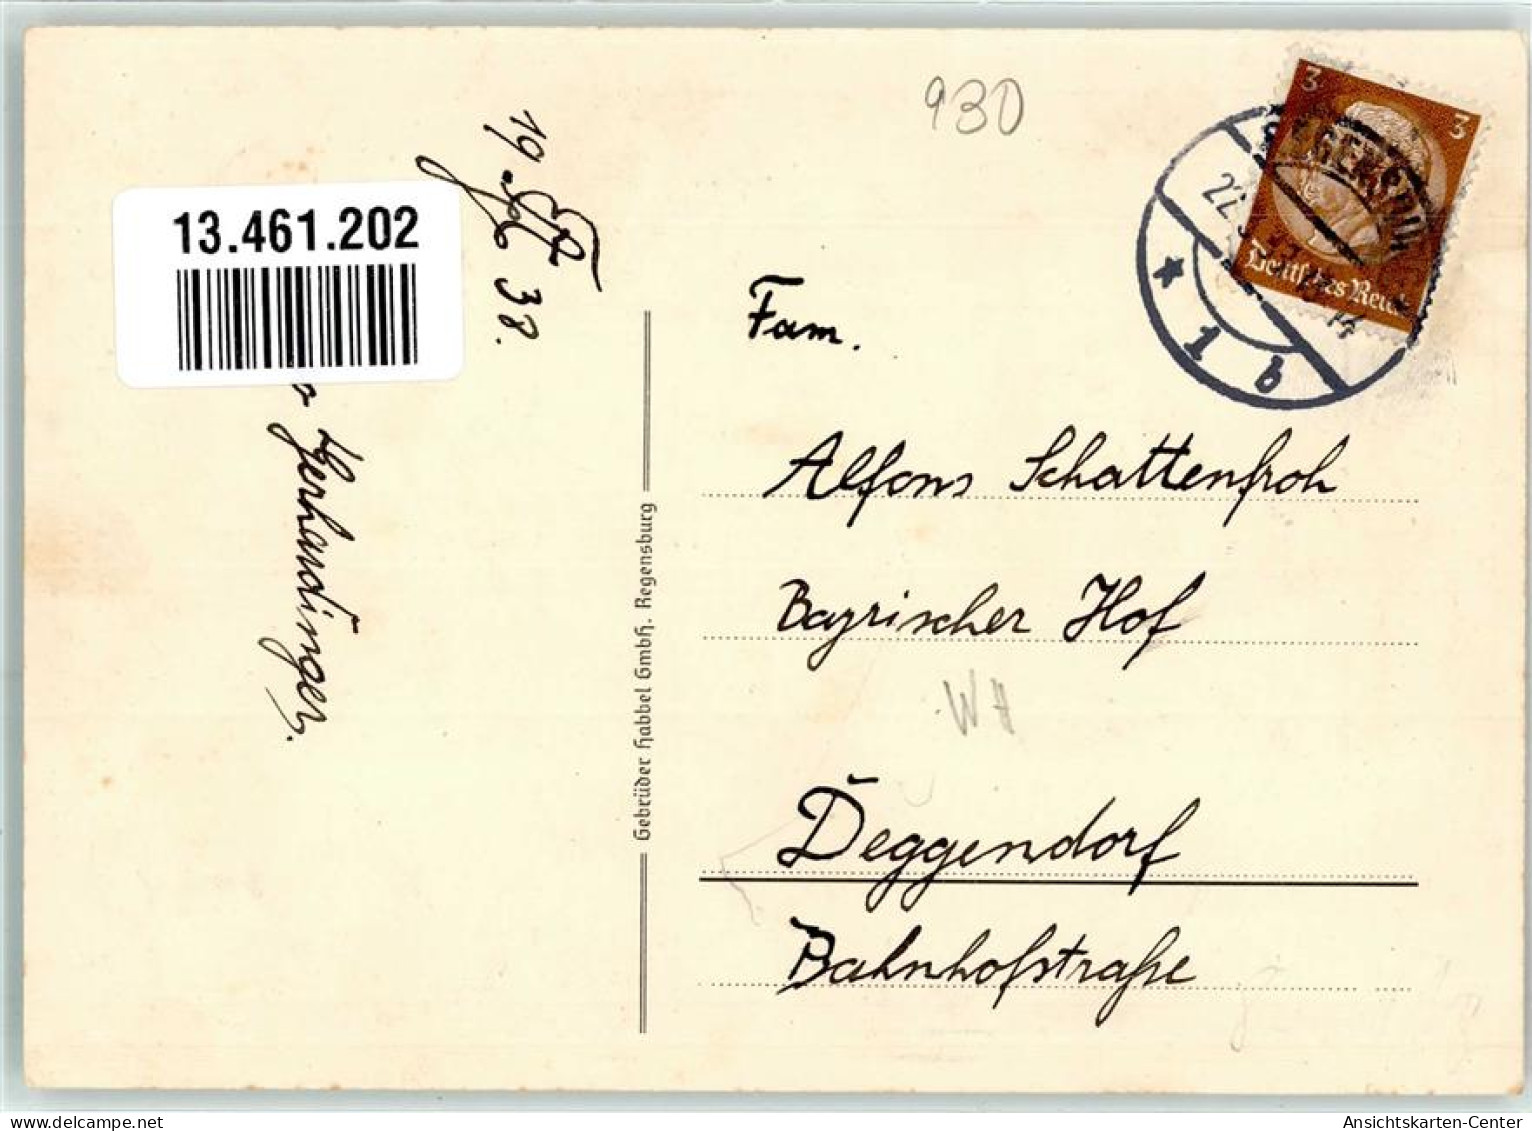 13461202 - Regensburg - Regensburg